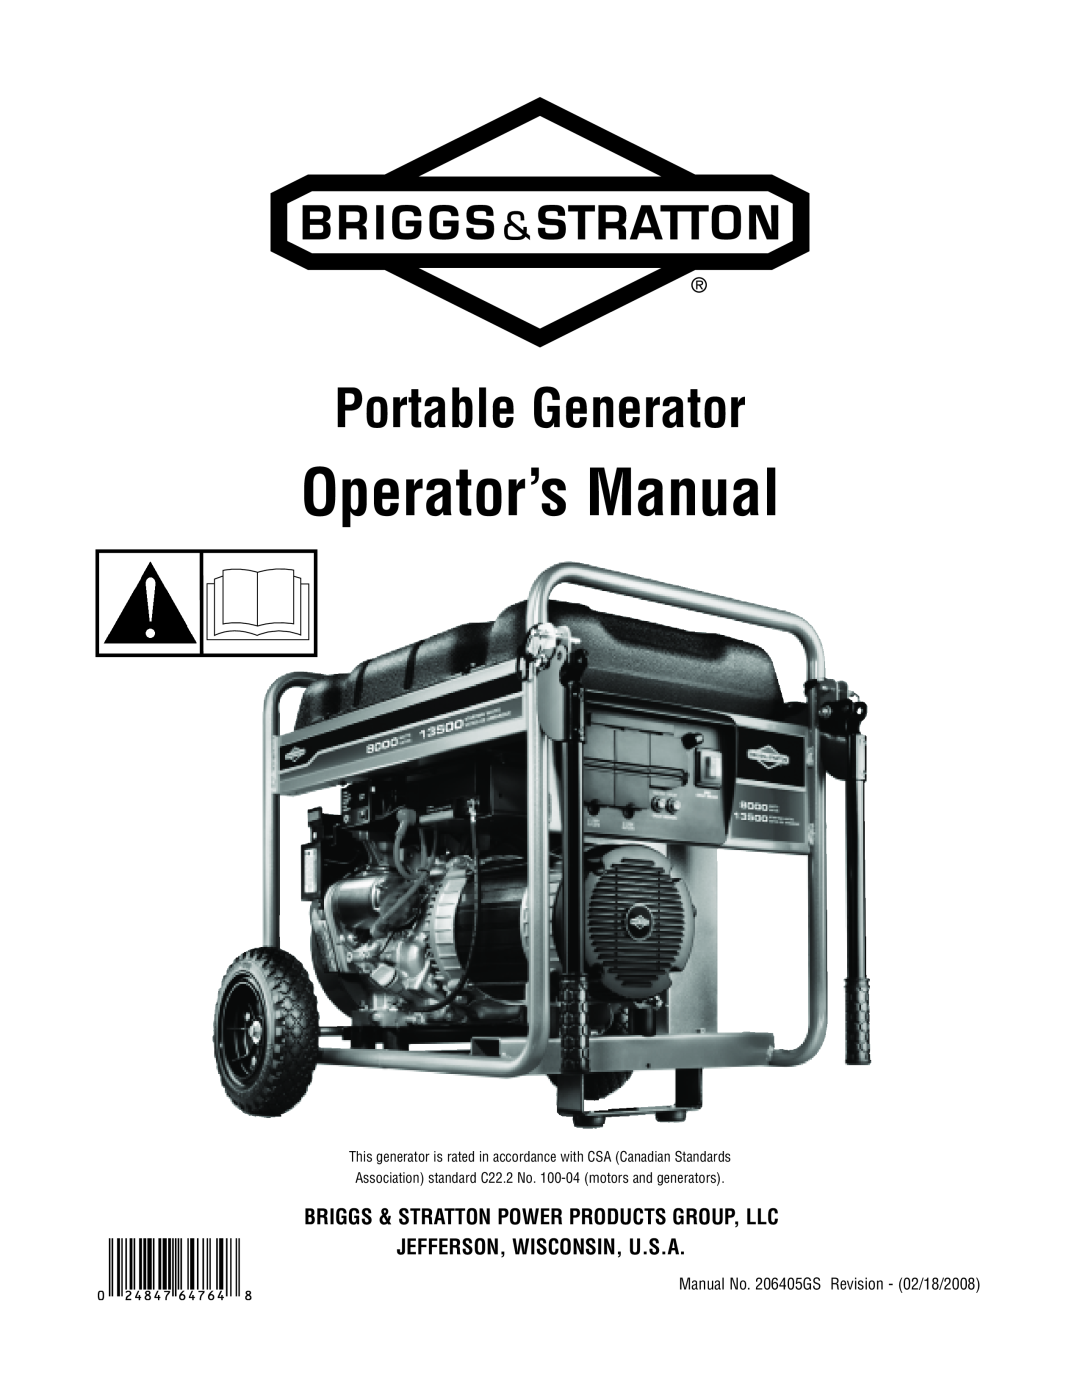 Briggs & Stratton 206405GS manual Operator’s Manual, Portable Generator, Briggs & Stratton Power Products Group, Llc 